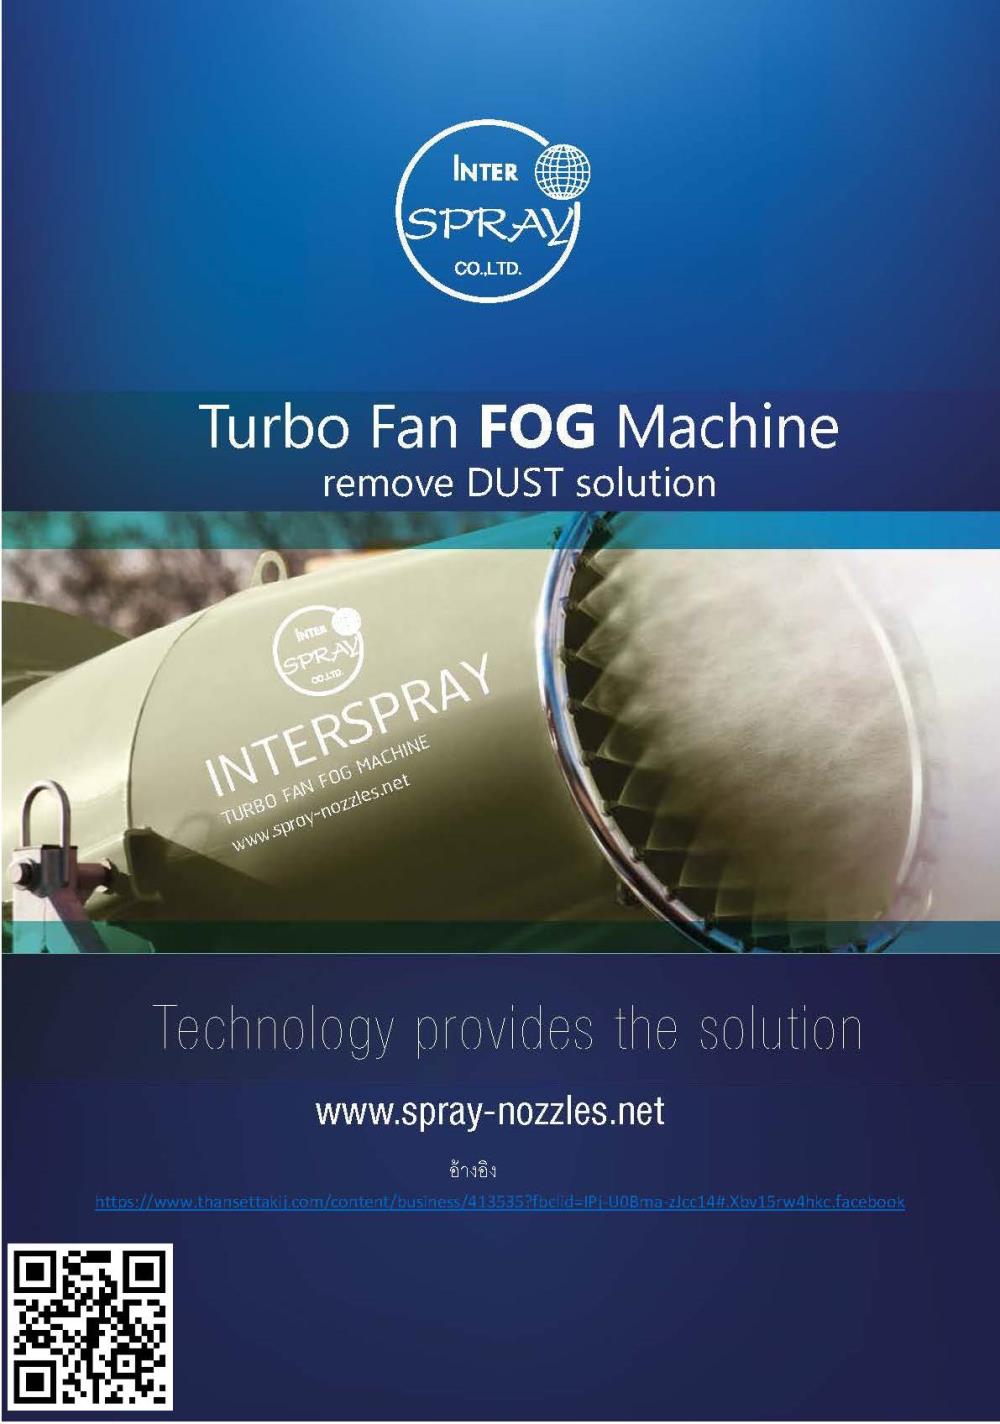 Turbo Fan Fog Machine TBF40,เครื่องพ่นหมอกไอน้ำ,Silvent,Industrial Services/Advertising